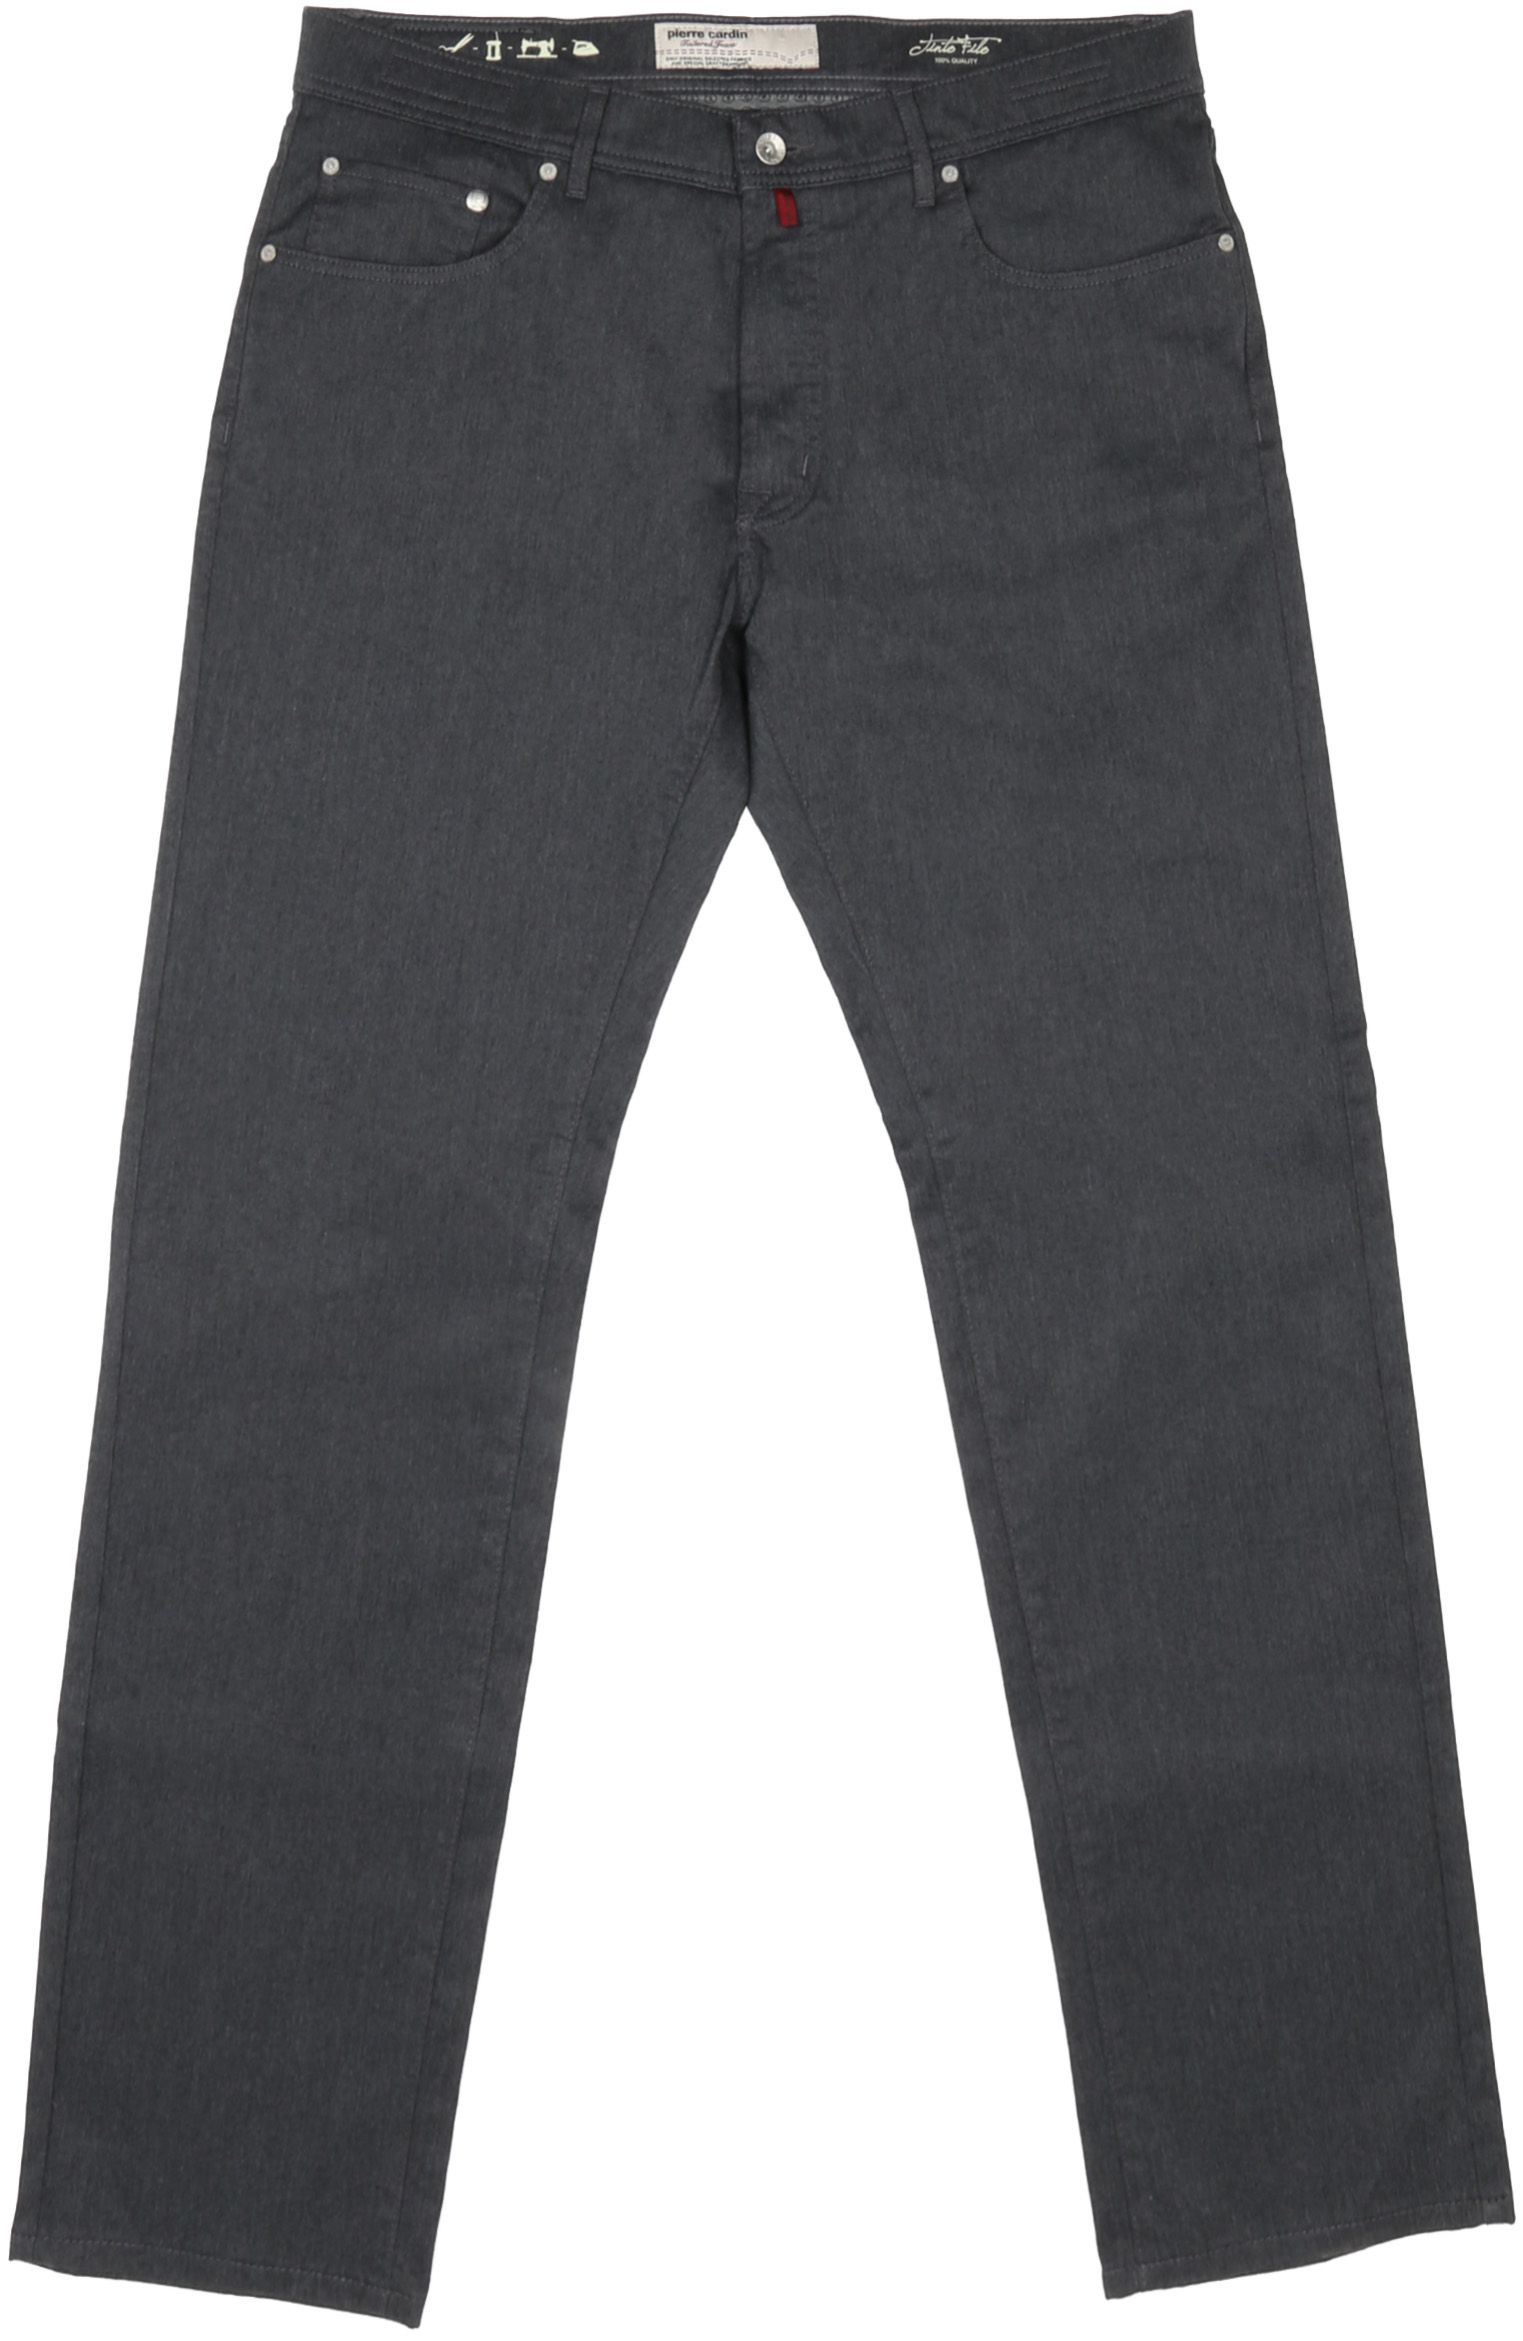 Pierre Cardin Jeans Lyon Dark Grey 82 Dark Grey size W 38